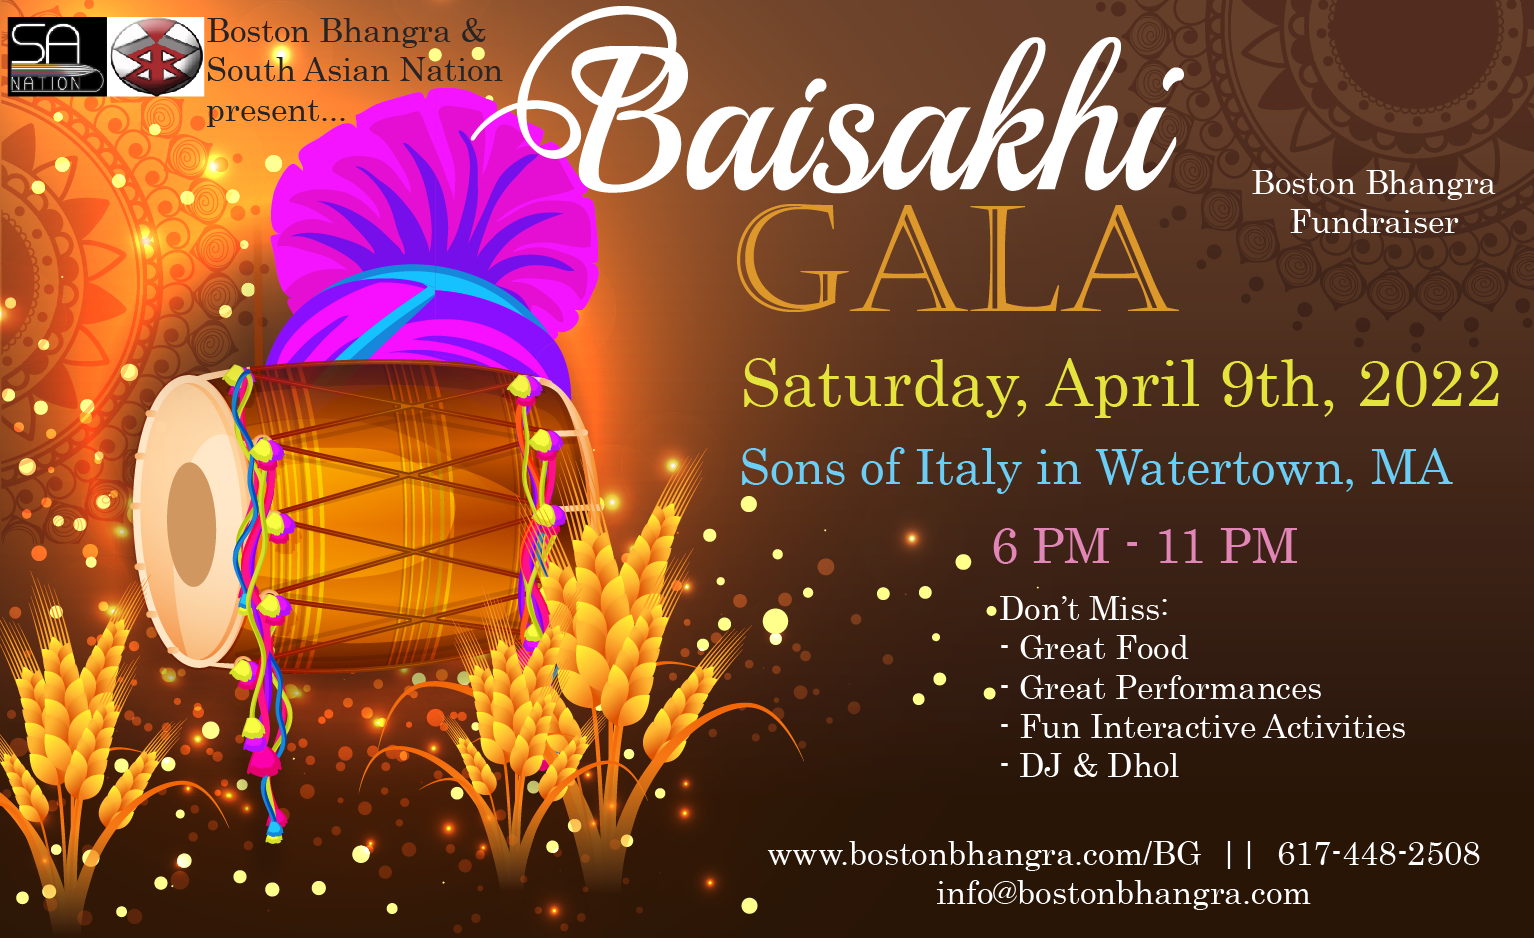 Baisakhi Gala - Family Spring Time Event!